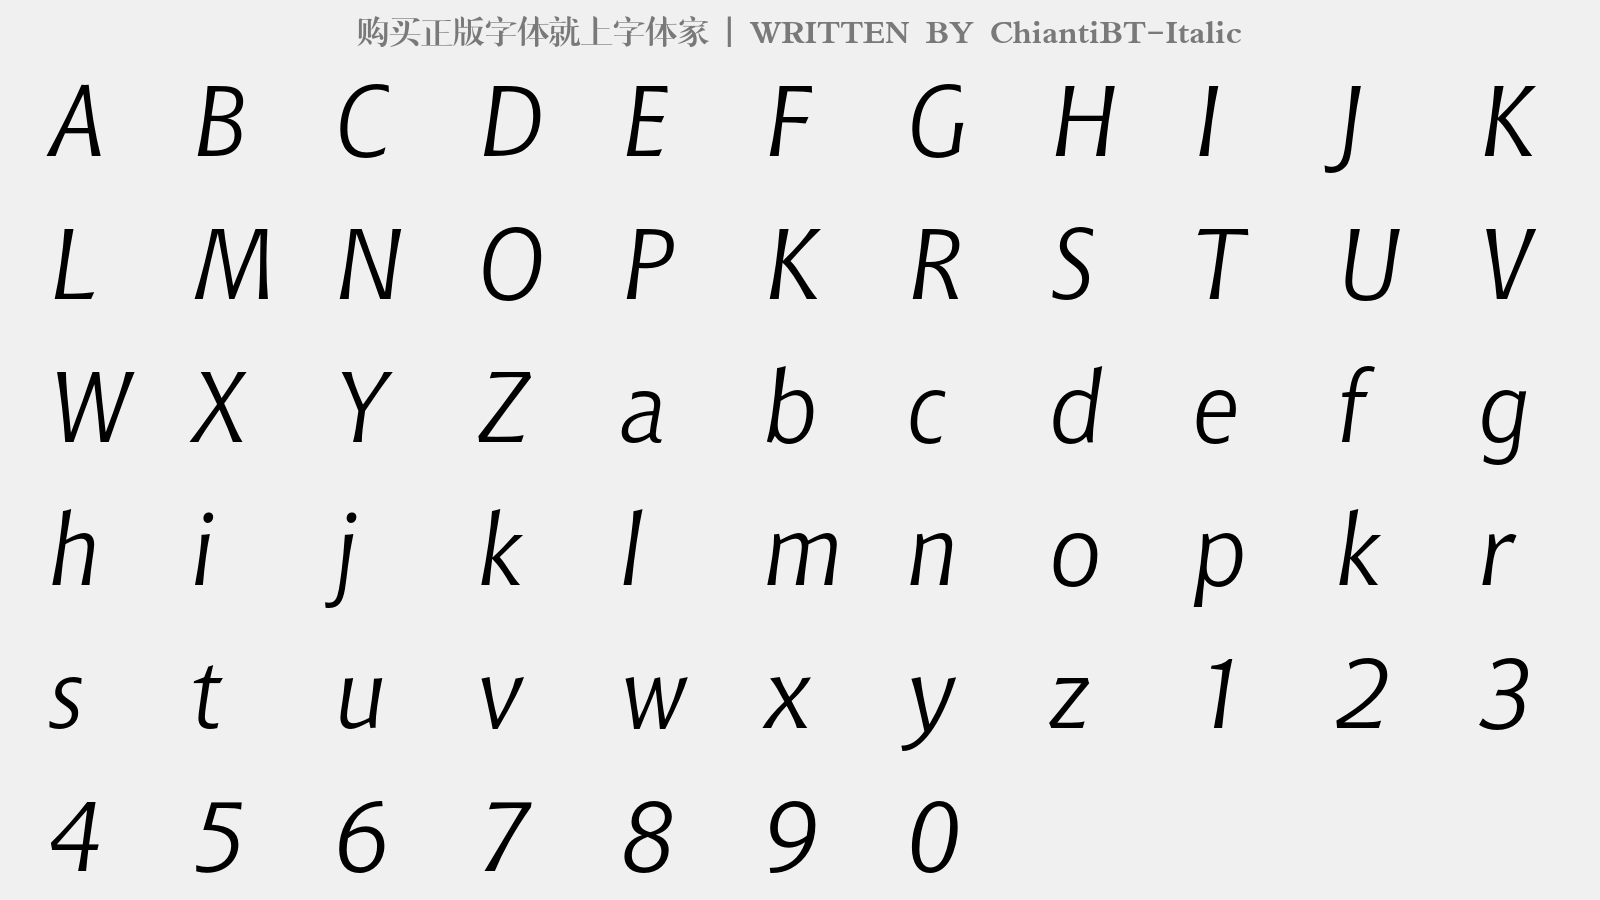 ChiantiBT-Italic - 大写字母/小写字母/数字